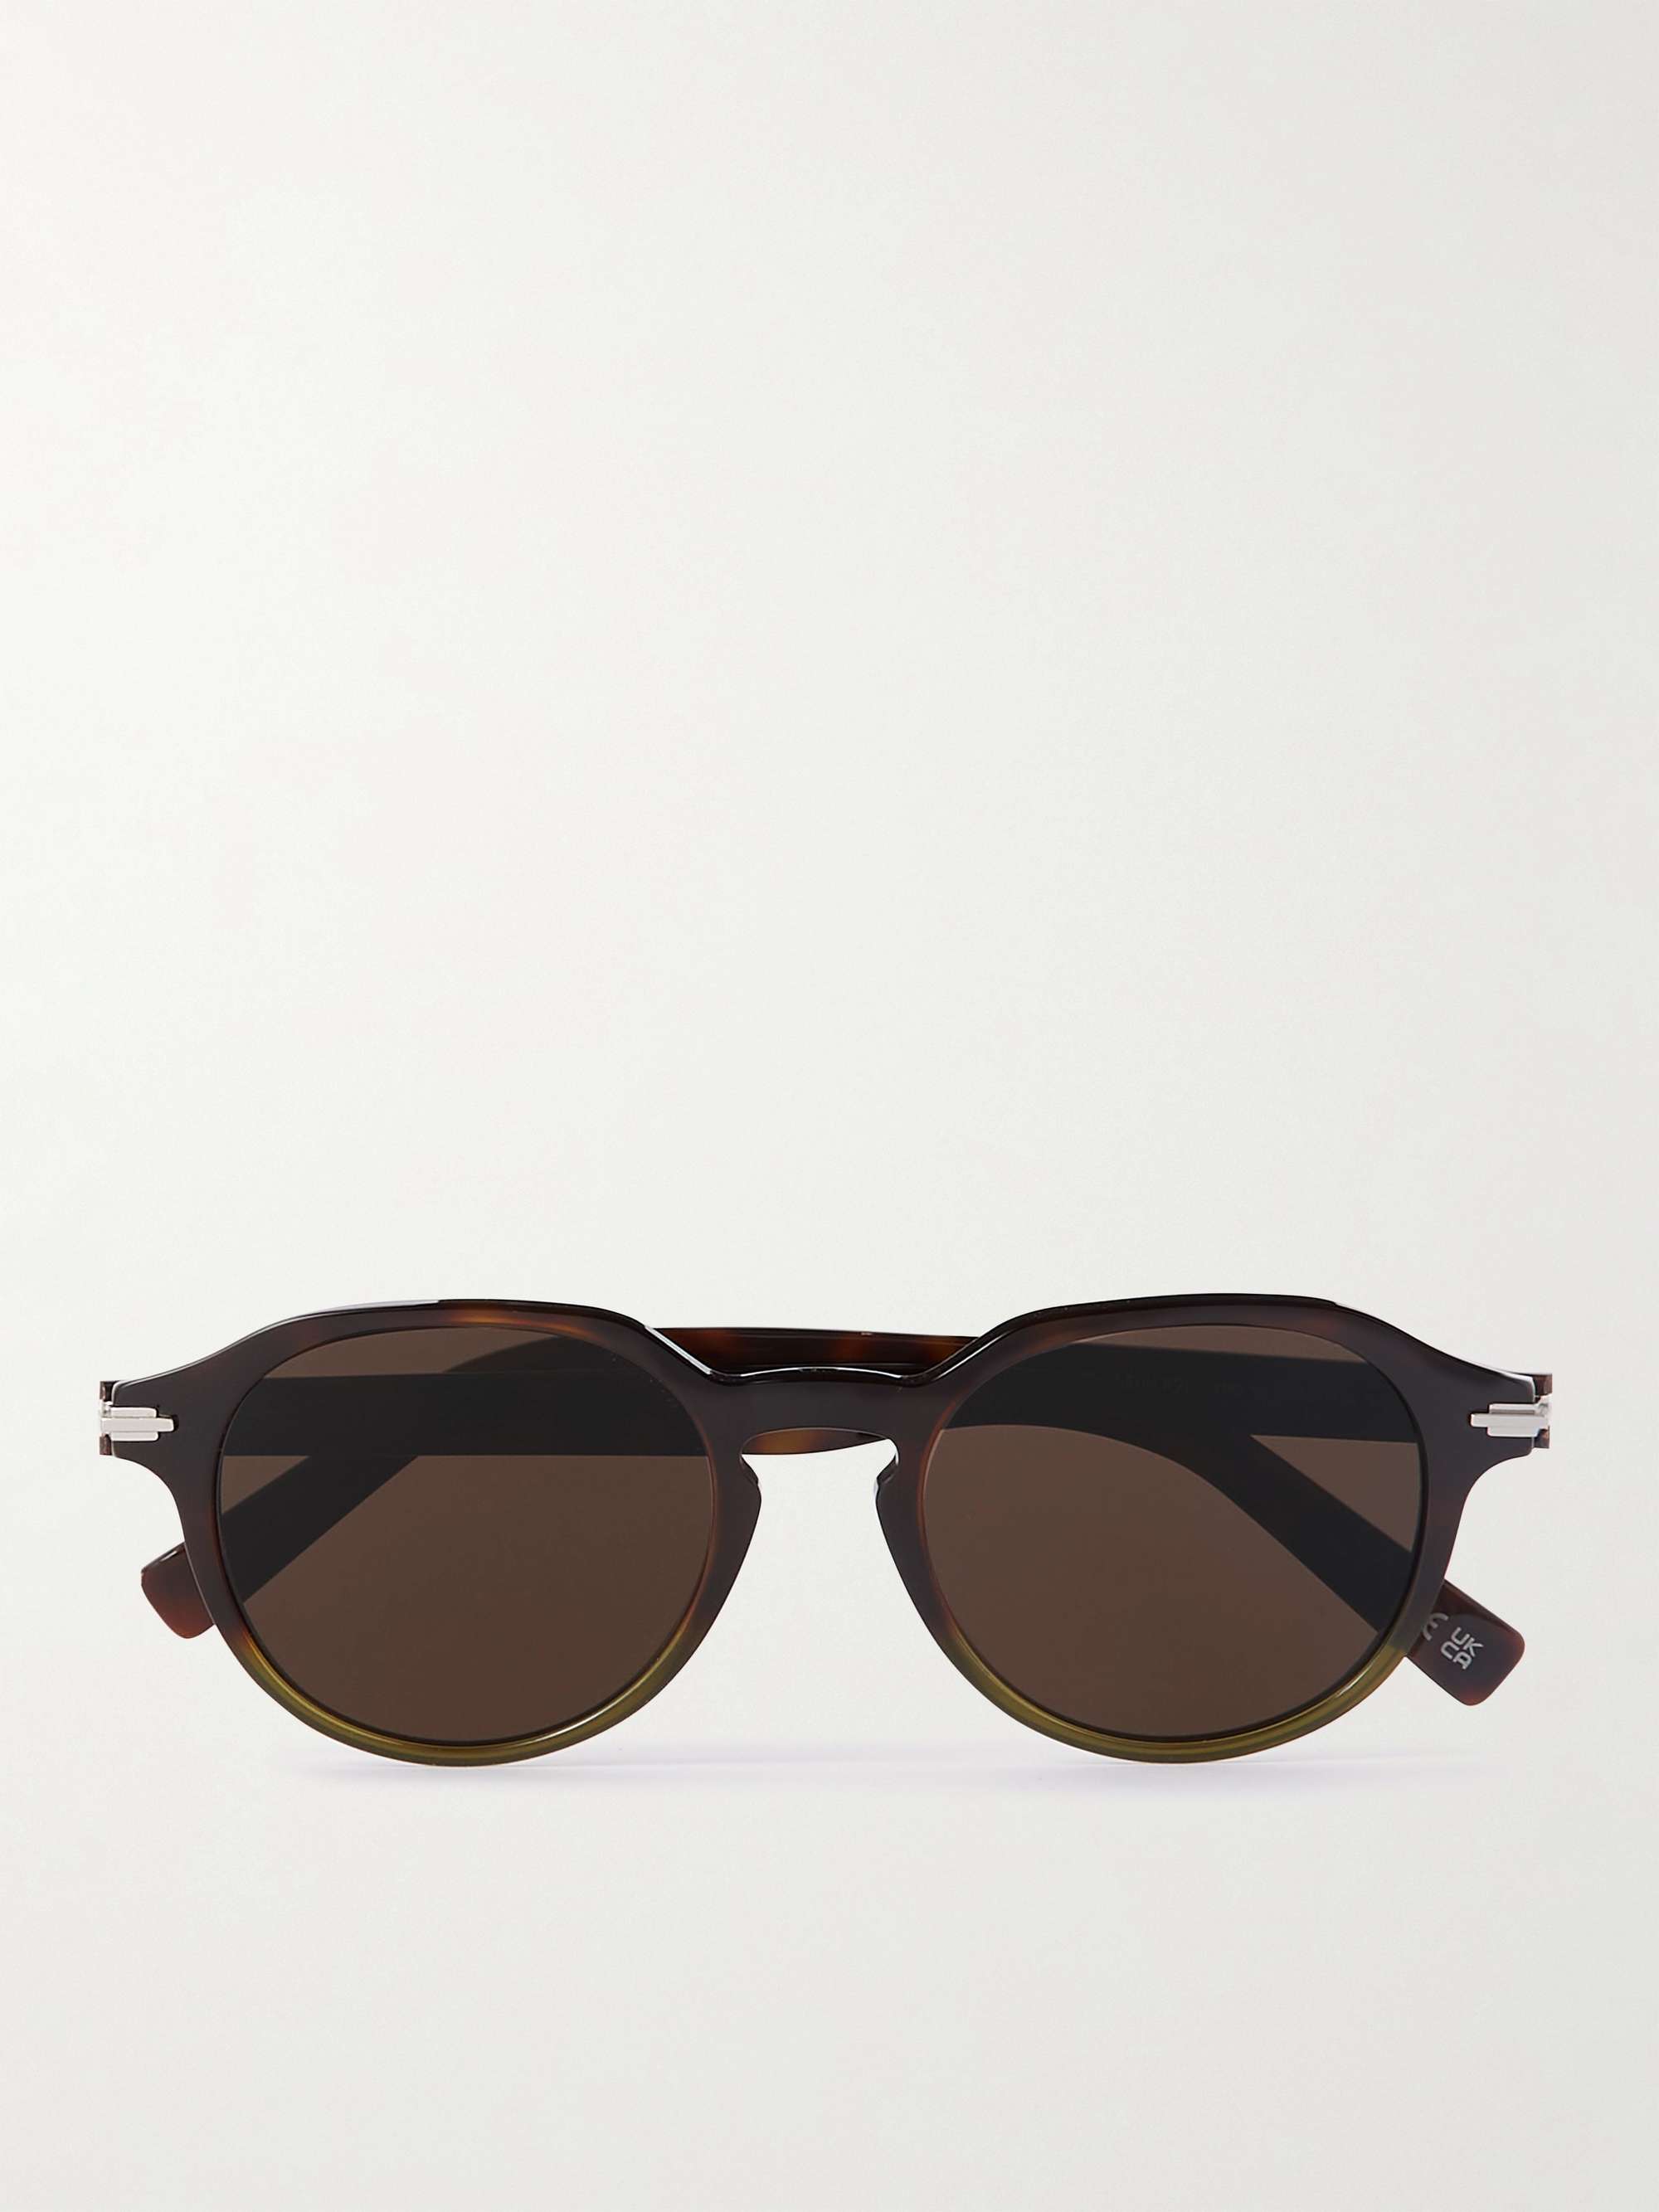 DIOR EYEWEAR DiorBlackSuit R2I Round-Frame Tortoiseshell Acetate Sunglasses